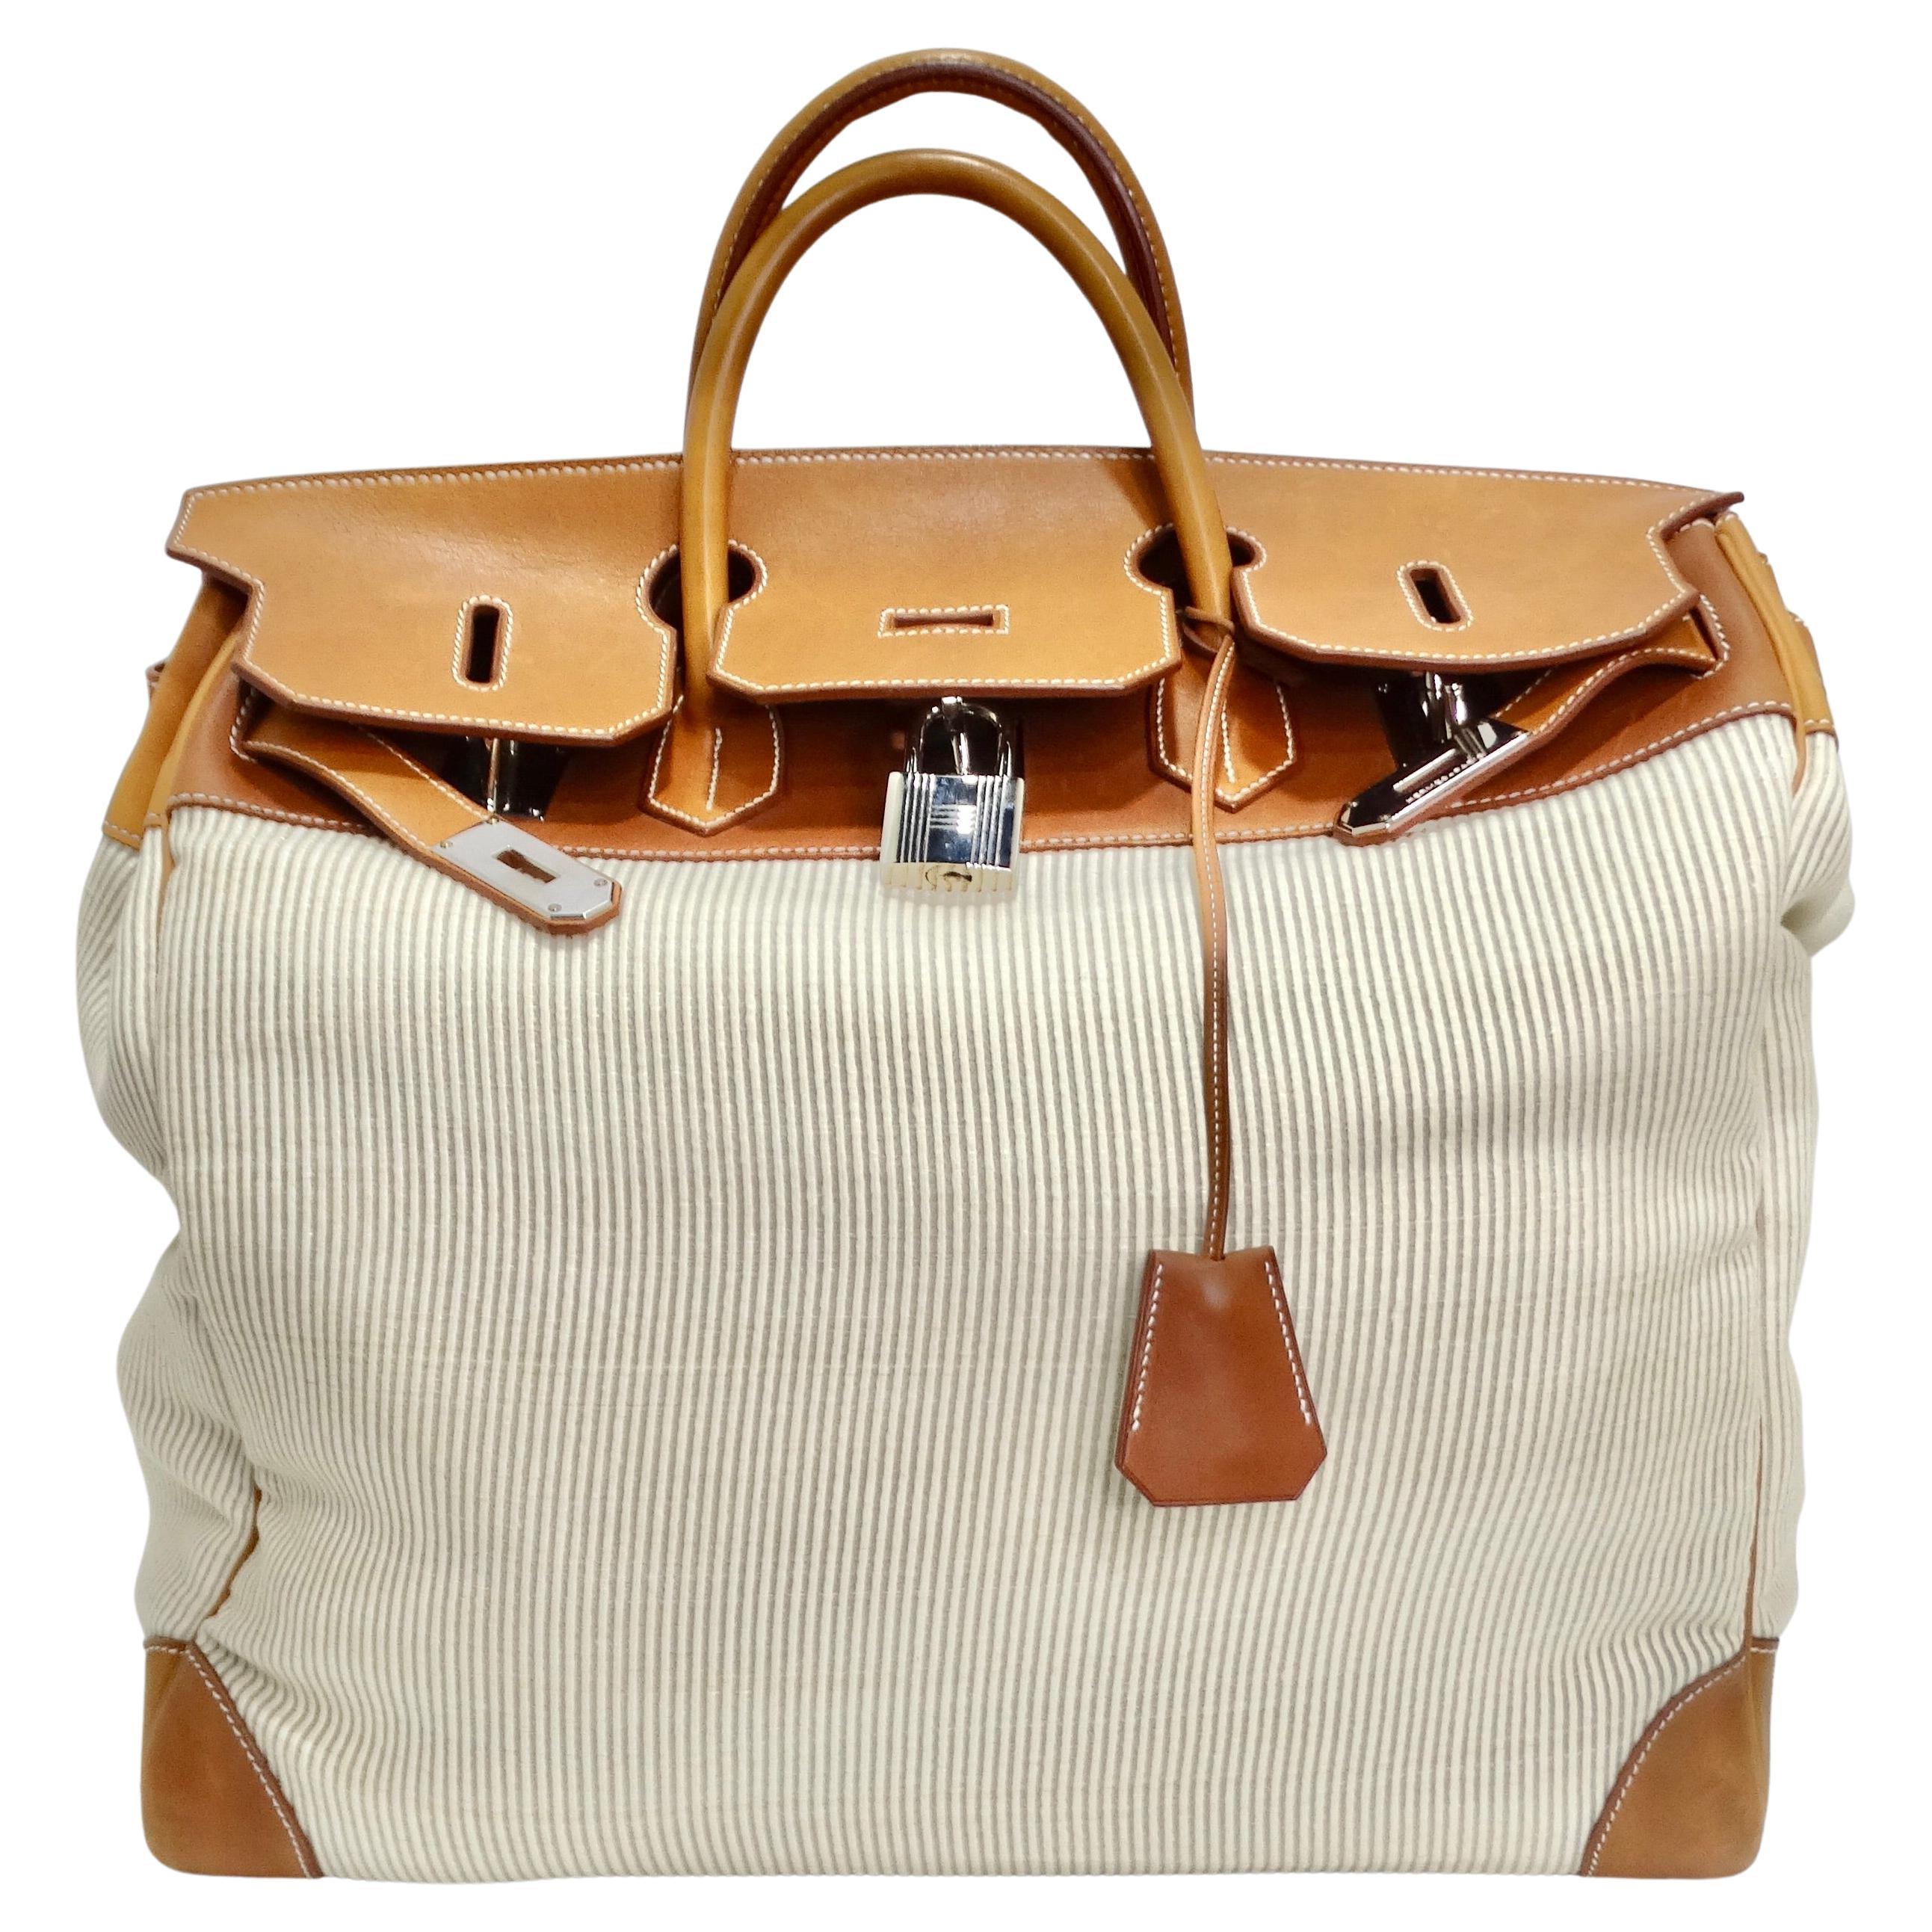 Hermes Birkin Bag 50cm in Barenia Crinoline For Sale